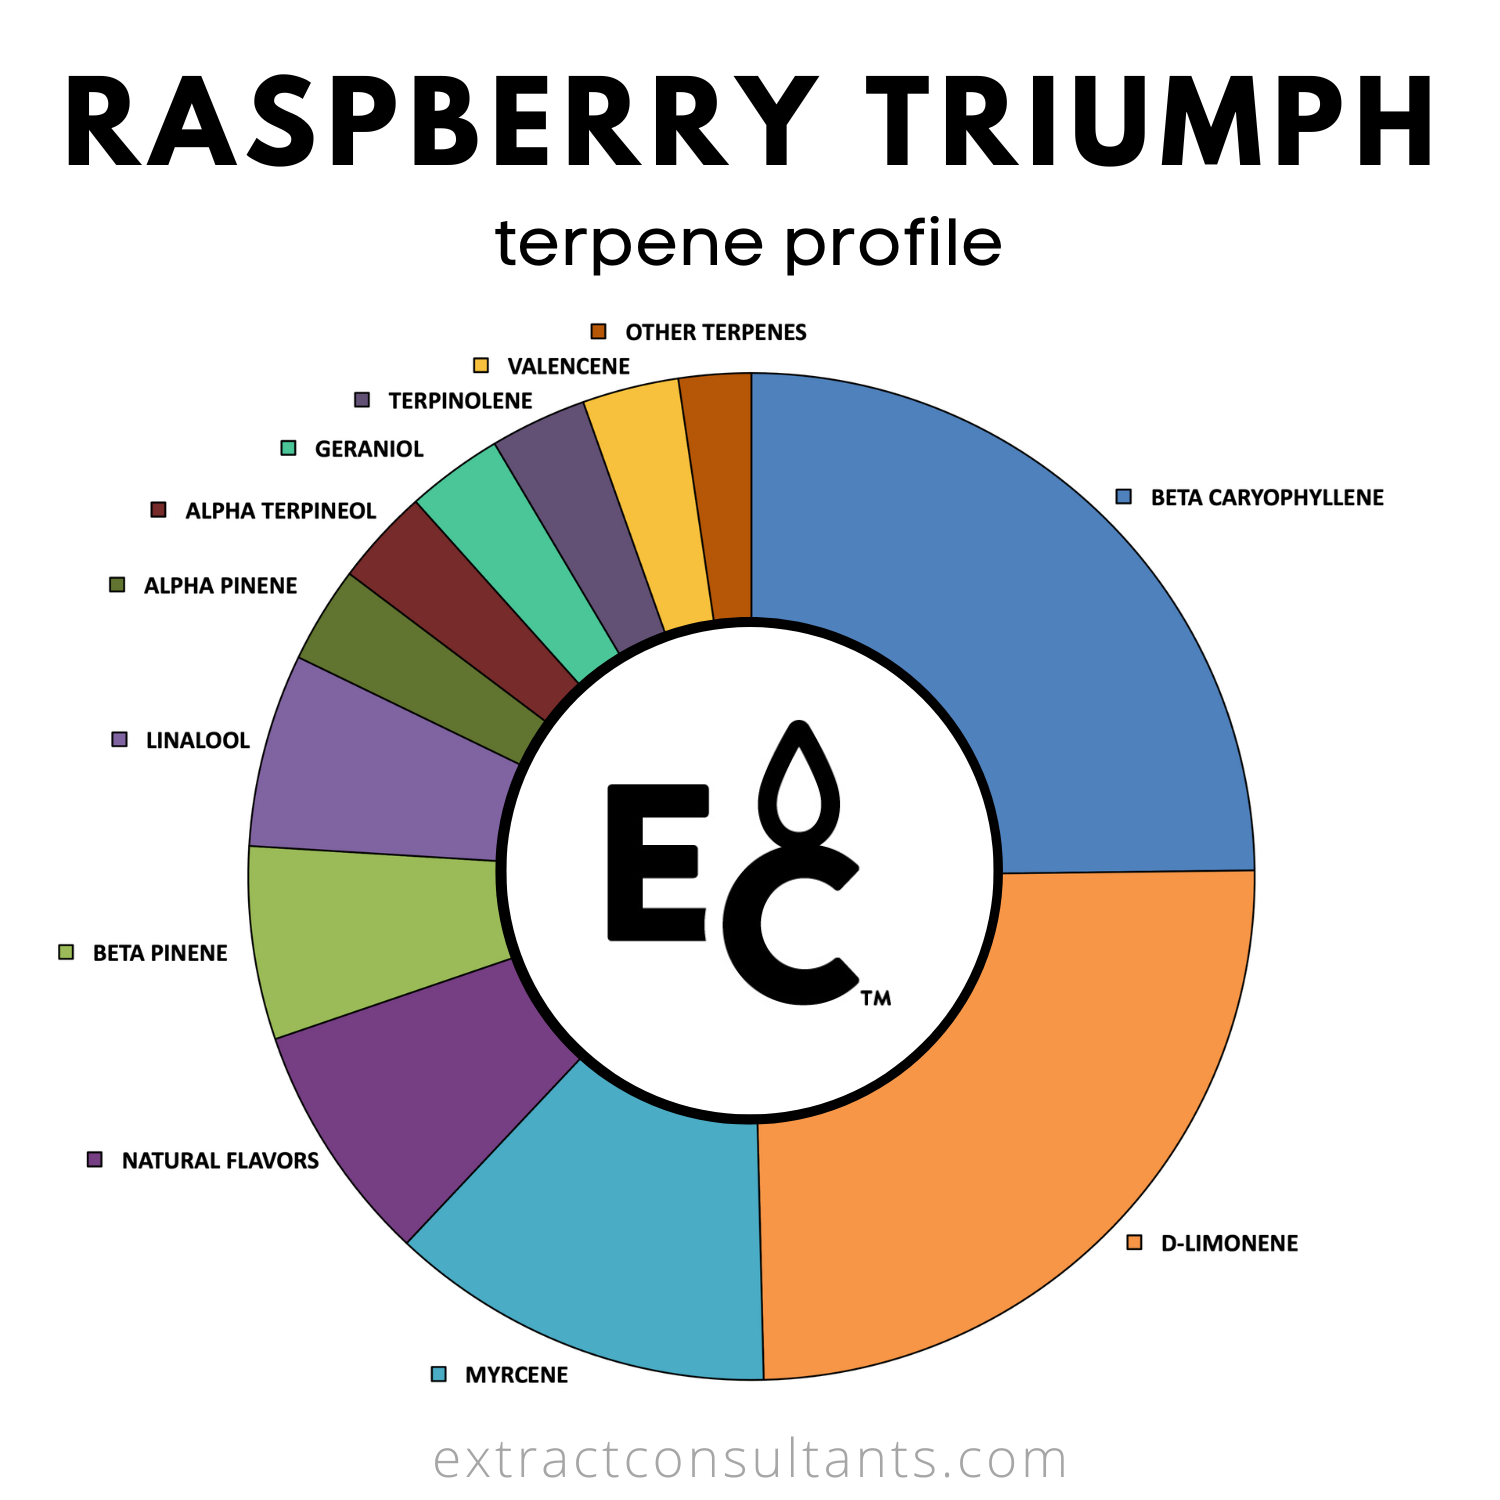 Raspberry Triumph TTB Approved Terpene Flavor